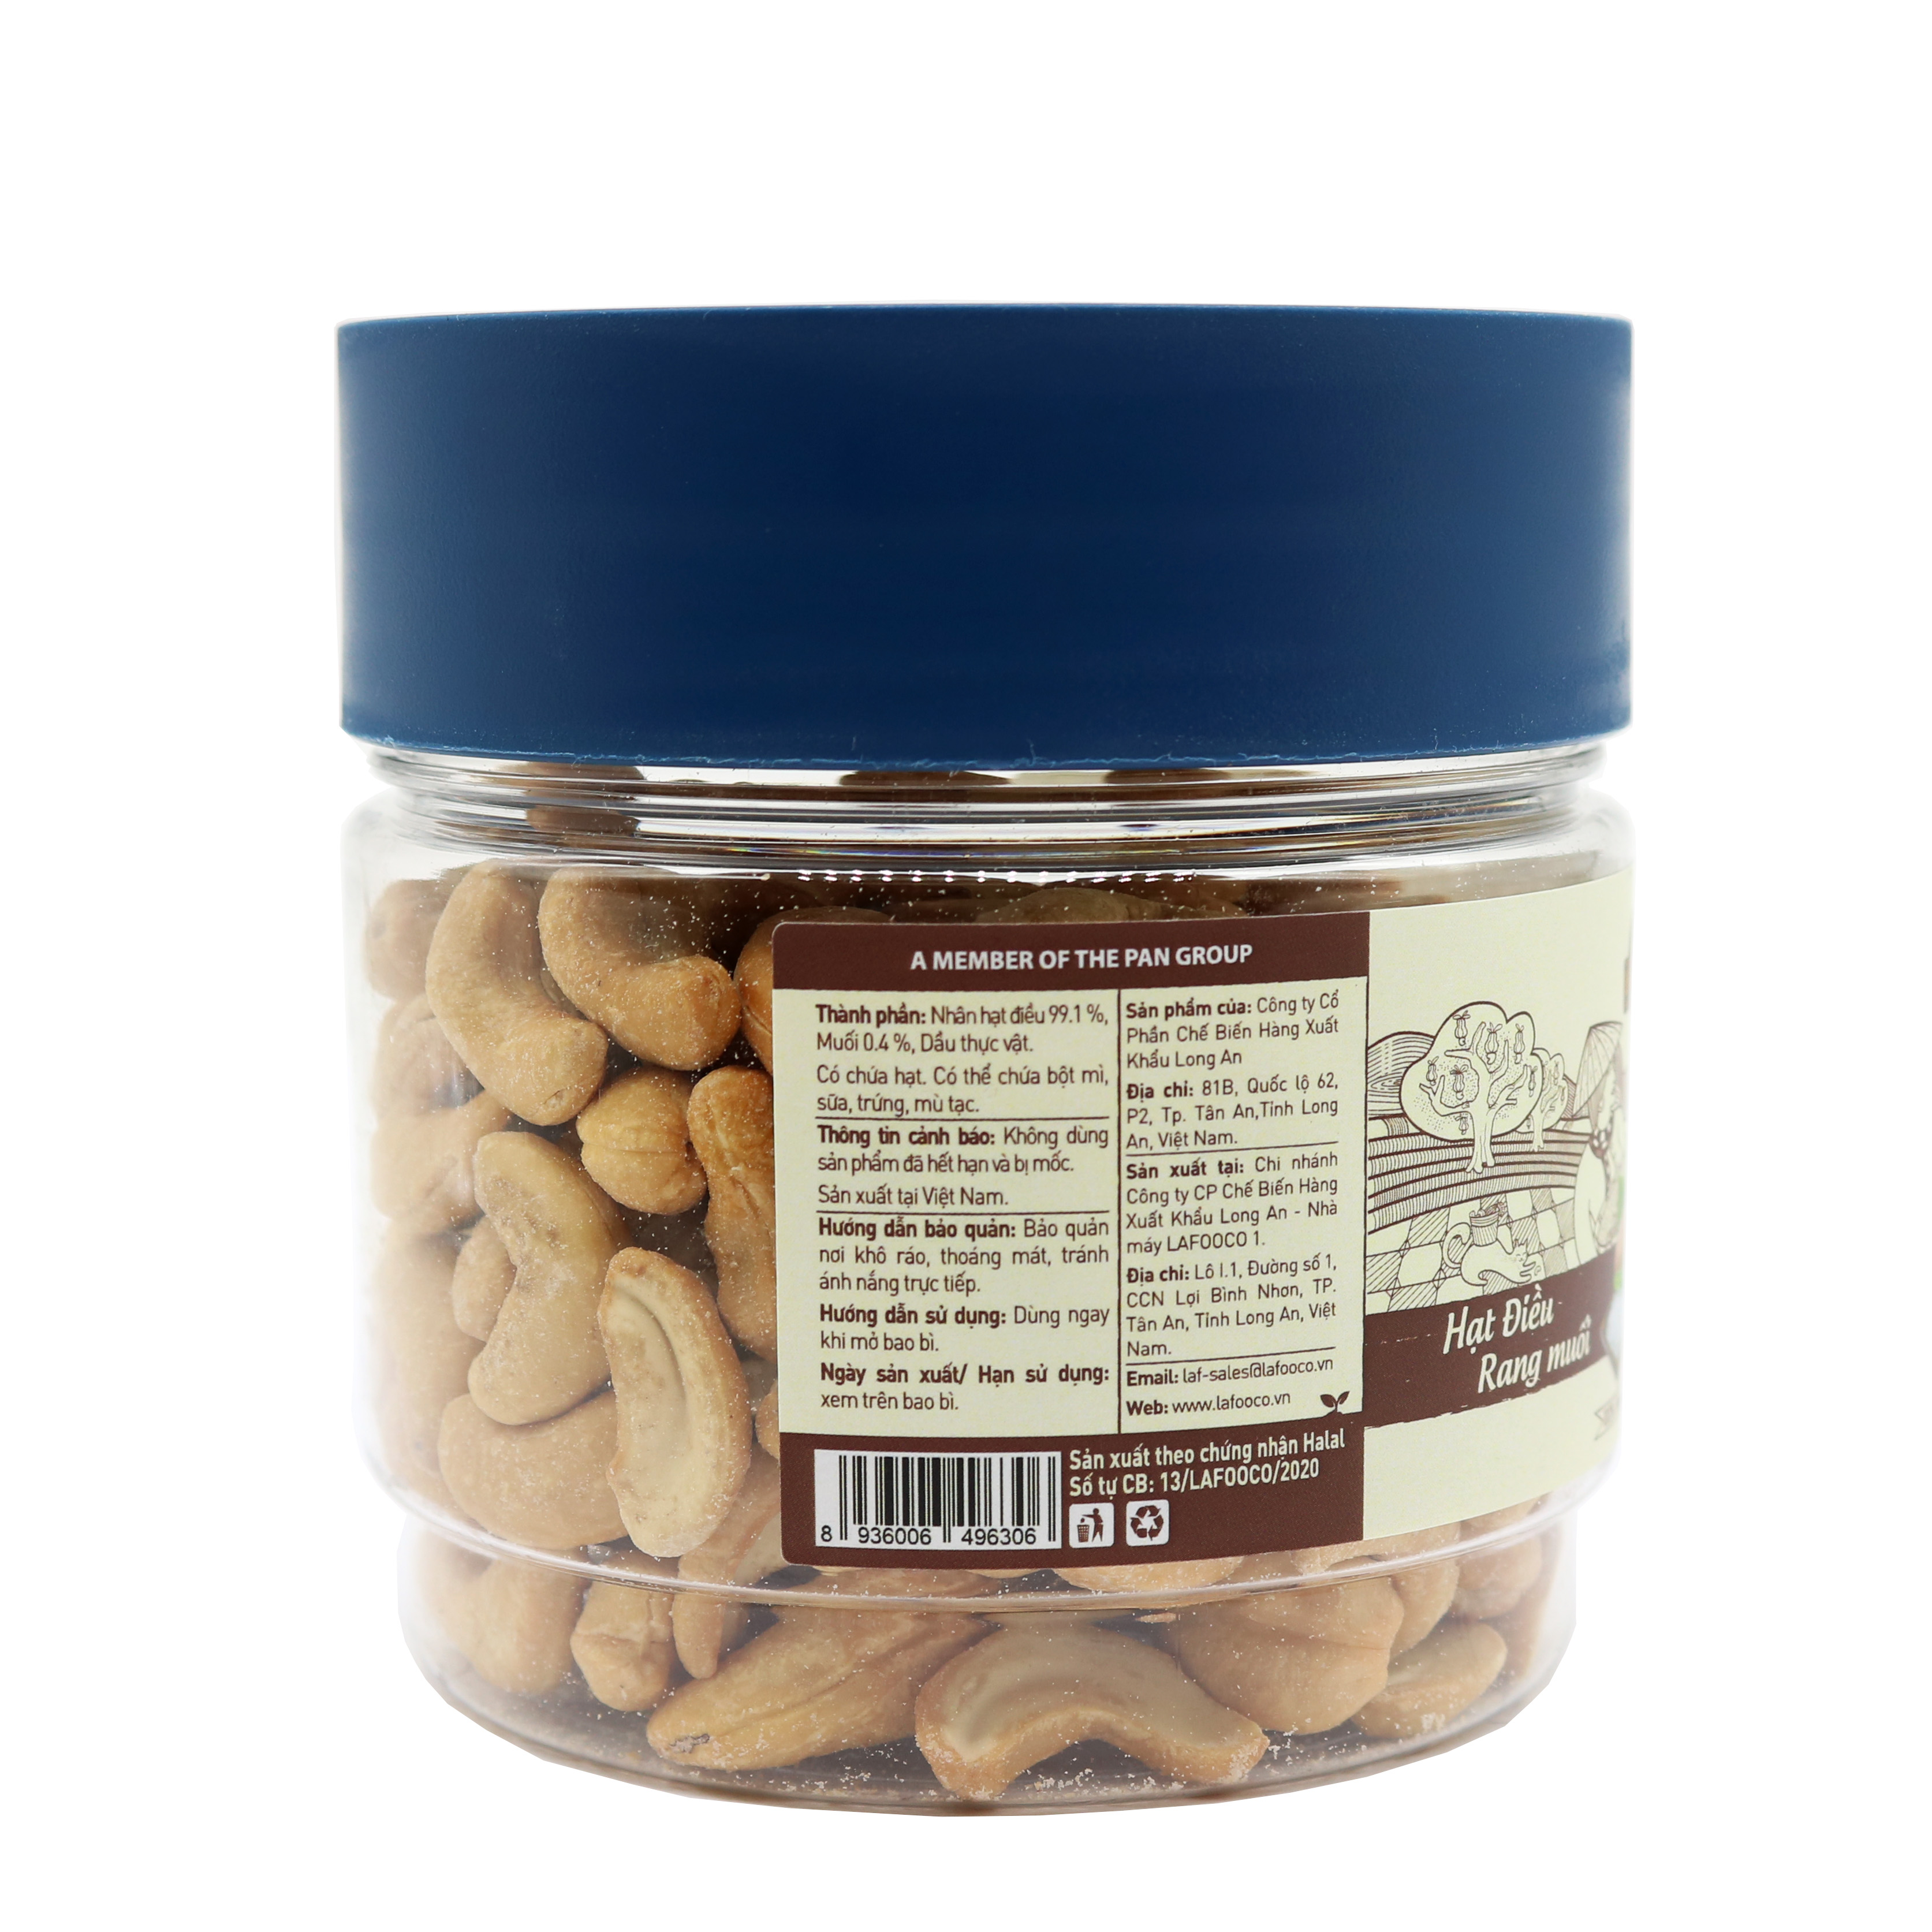 Hạt Điều Rang Muối 200g LAFOOCO Salted Roasted Cashew Nuts